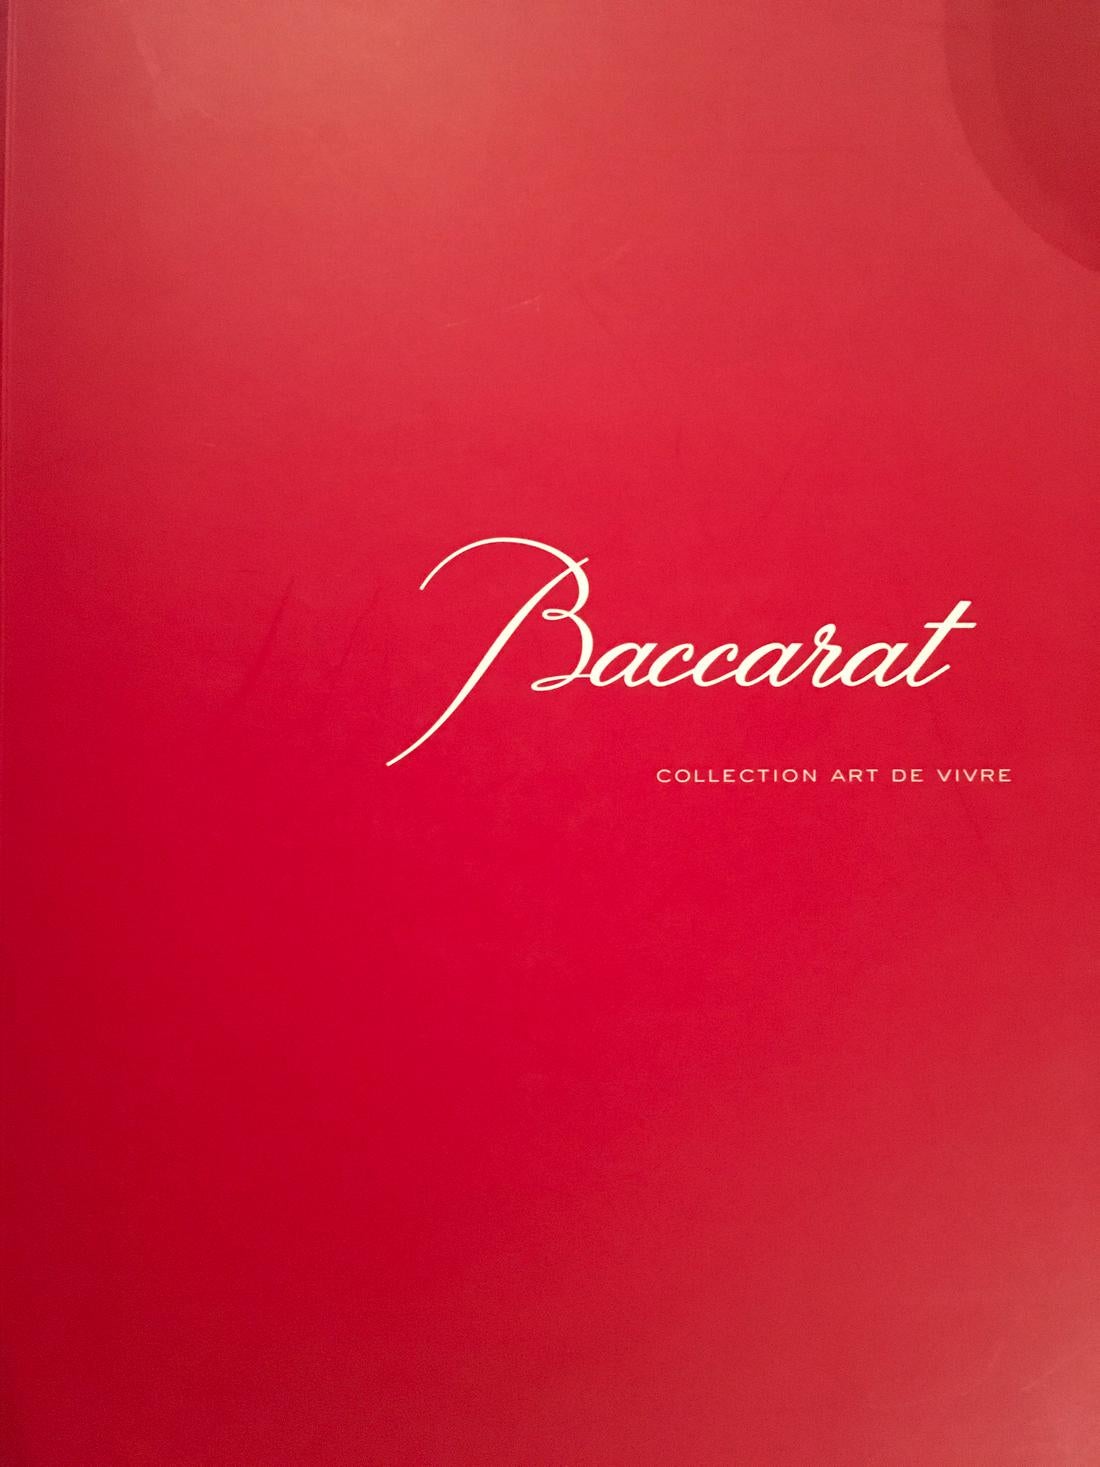 21st century baccarat